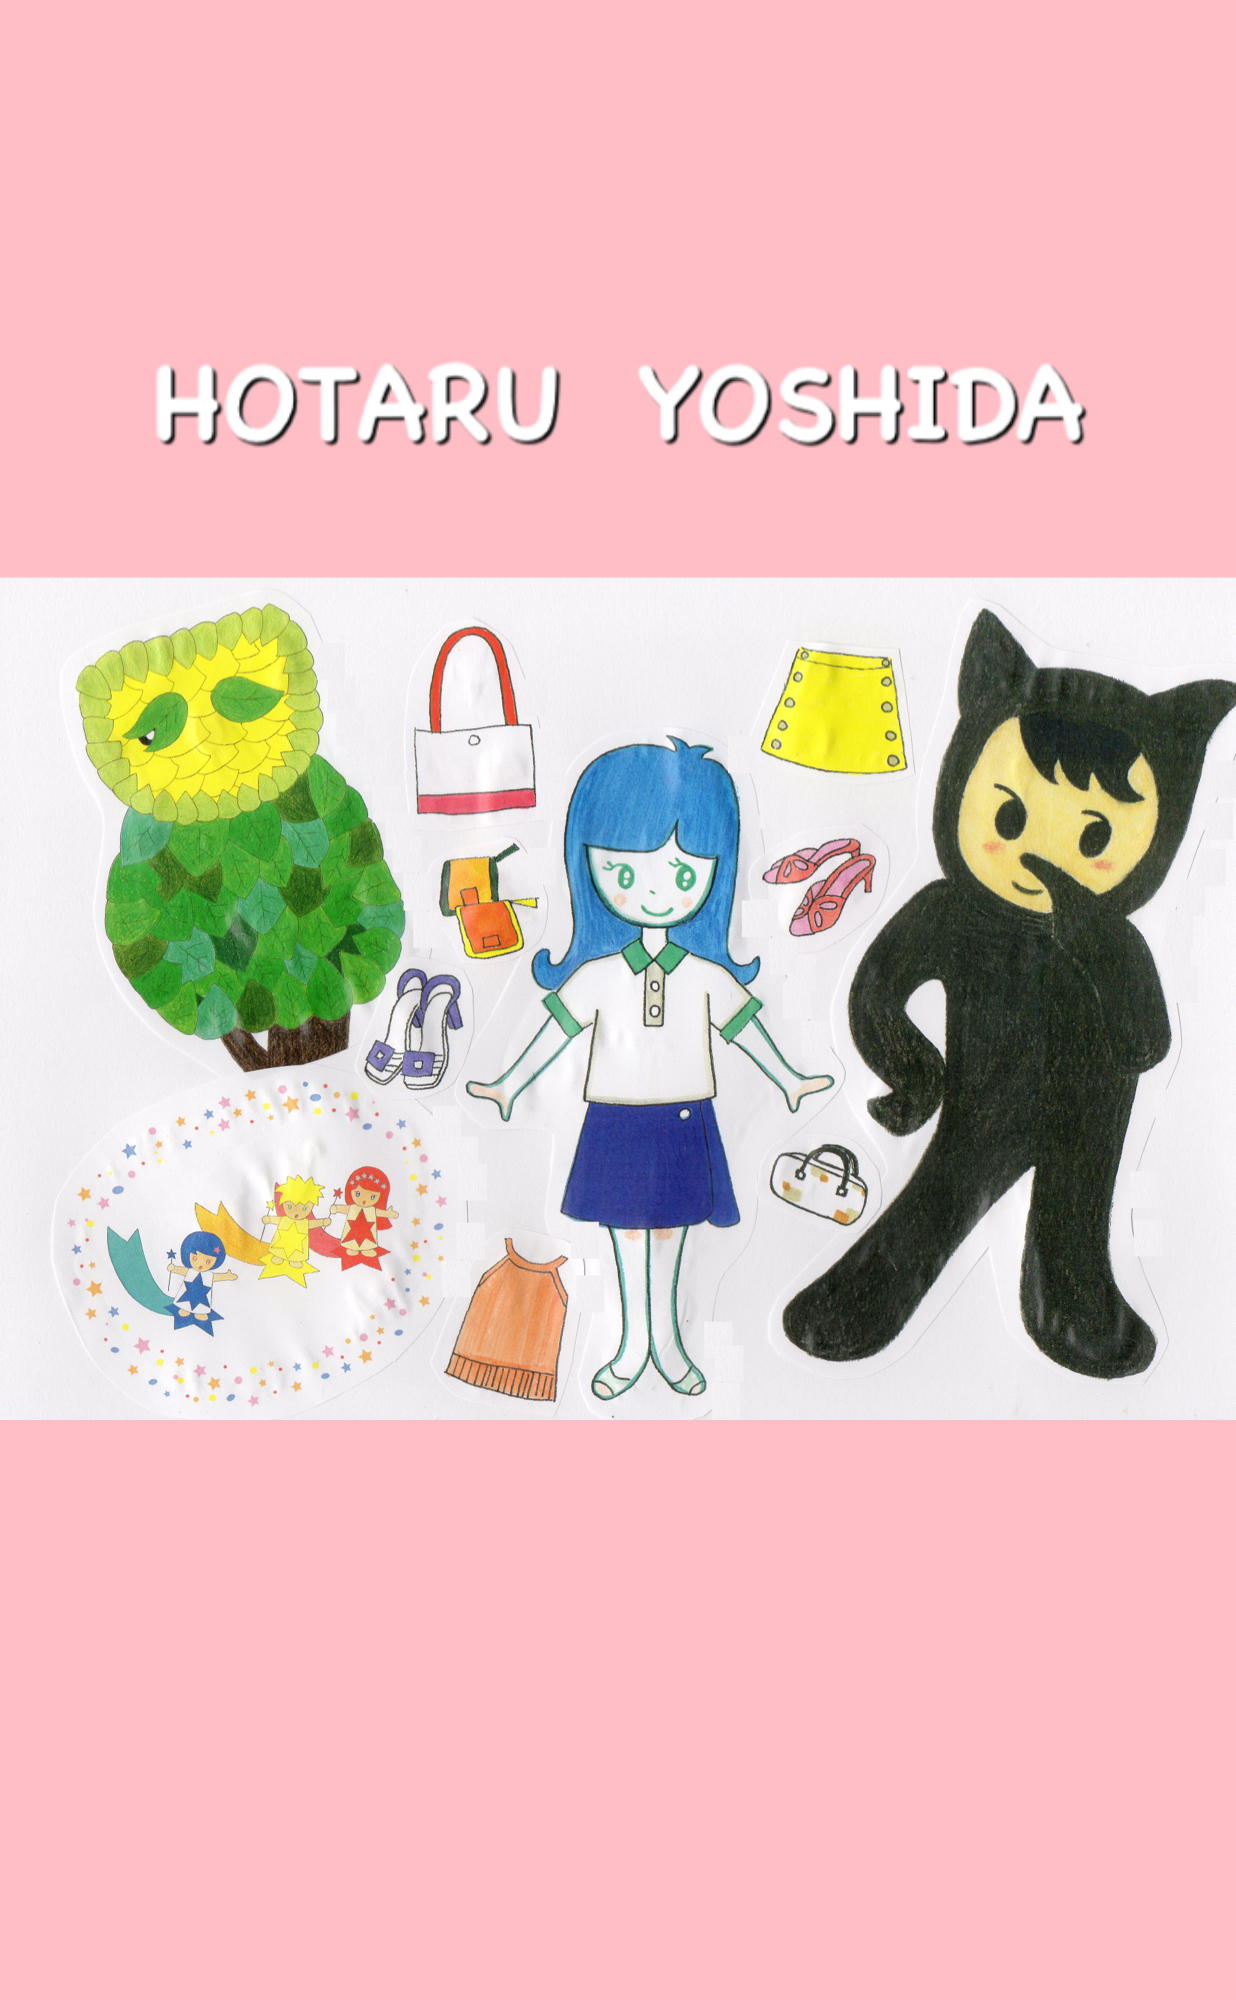 HOTARU YOSHIDA